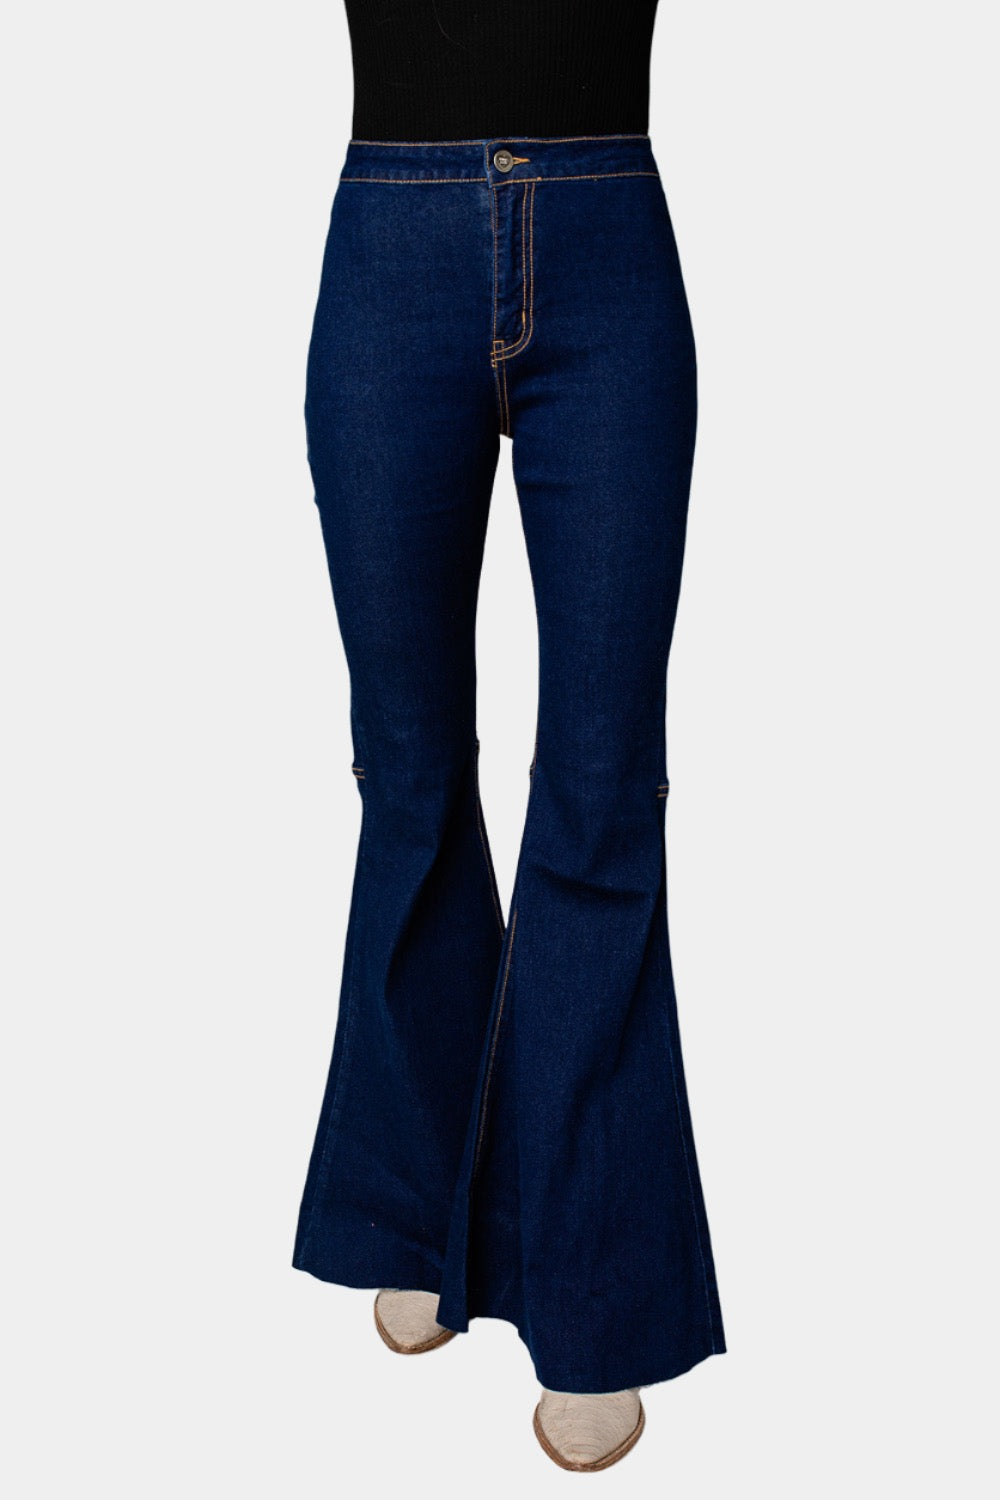 Women's Flared Jeans, Bell Bottom Jeans